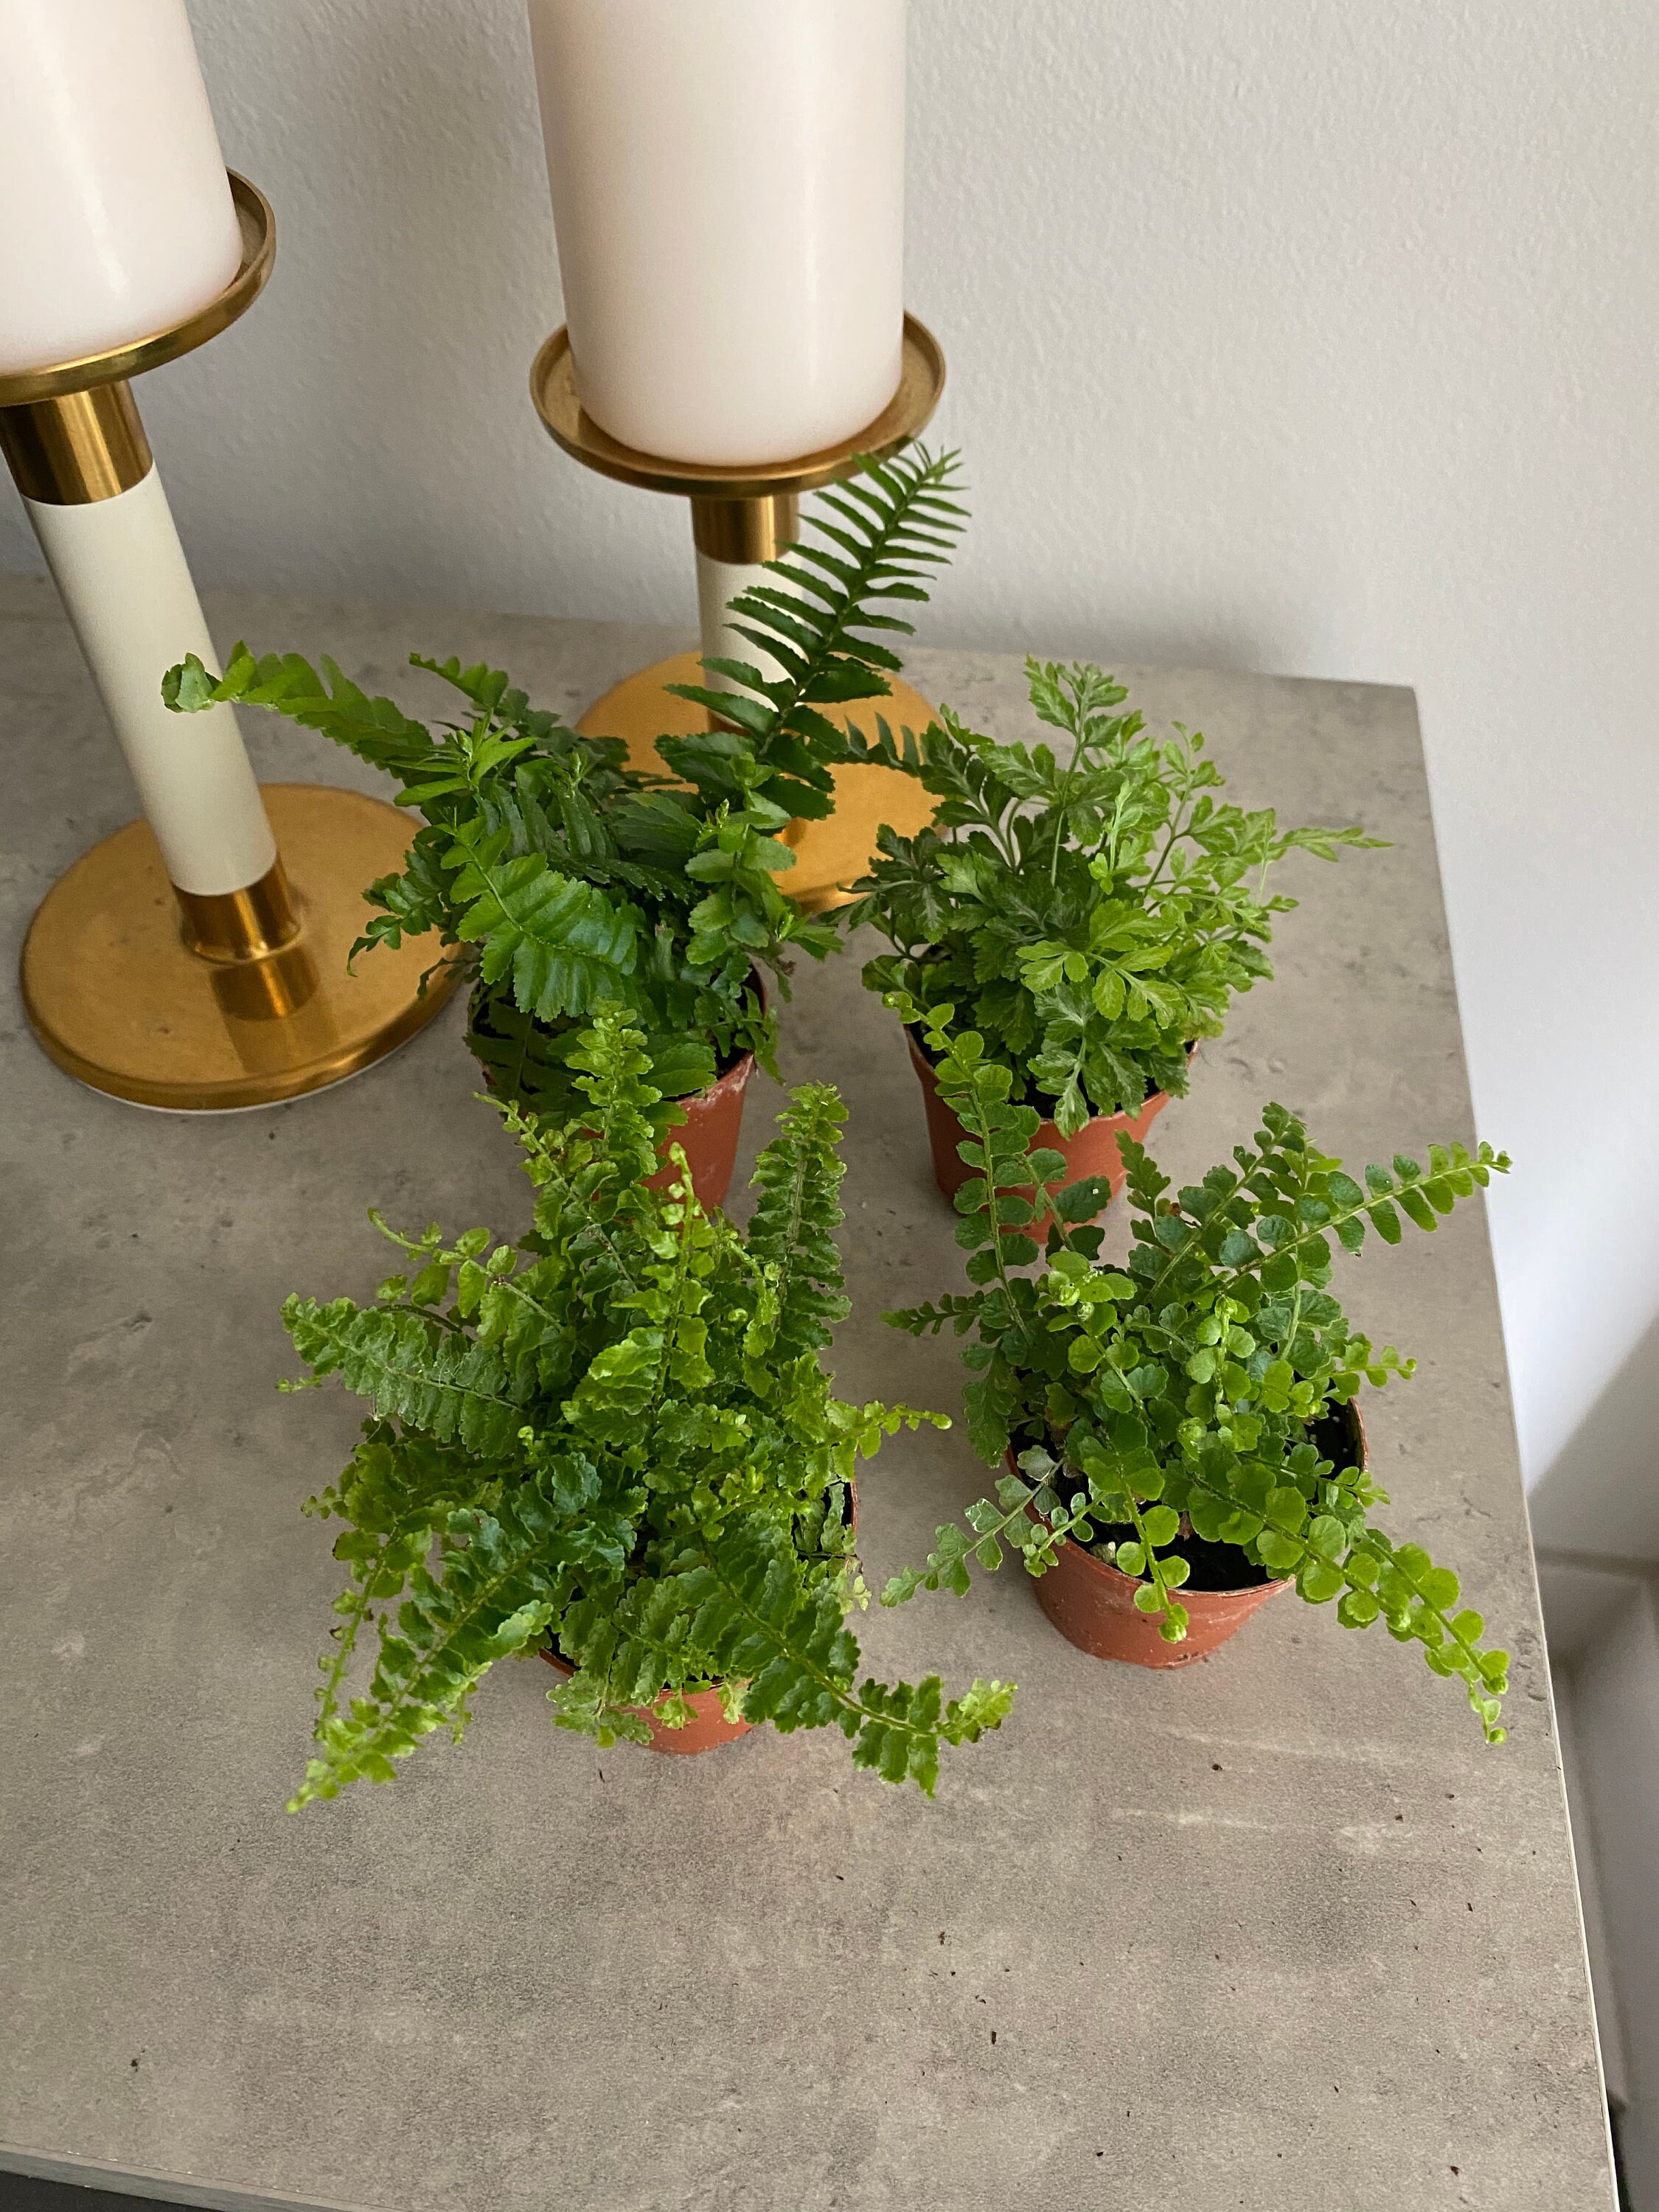 2" Assorted Mini Ferns / Lemon Button / Boston / Lady Fern / Crinkle Fern / Silver Lace Fern Terrarium plants